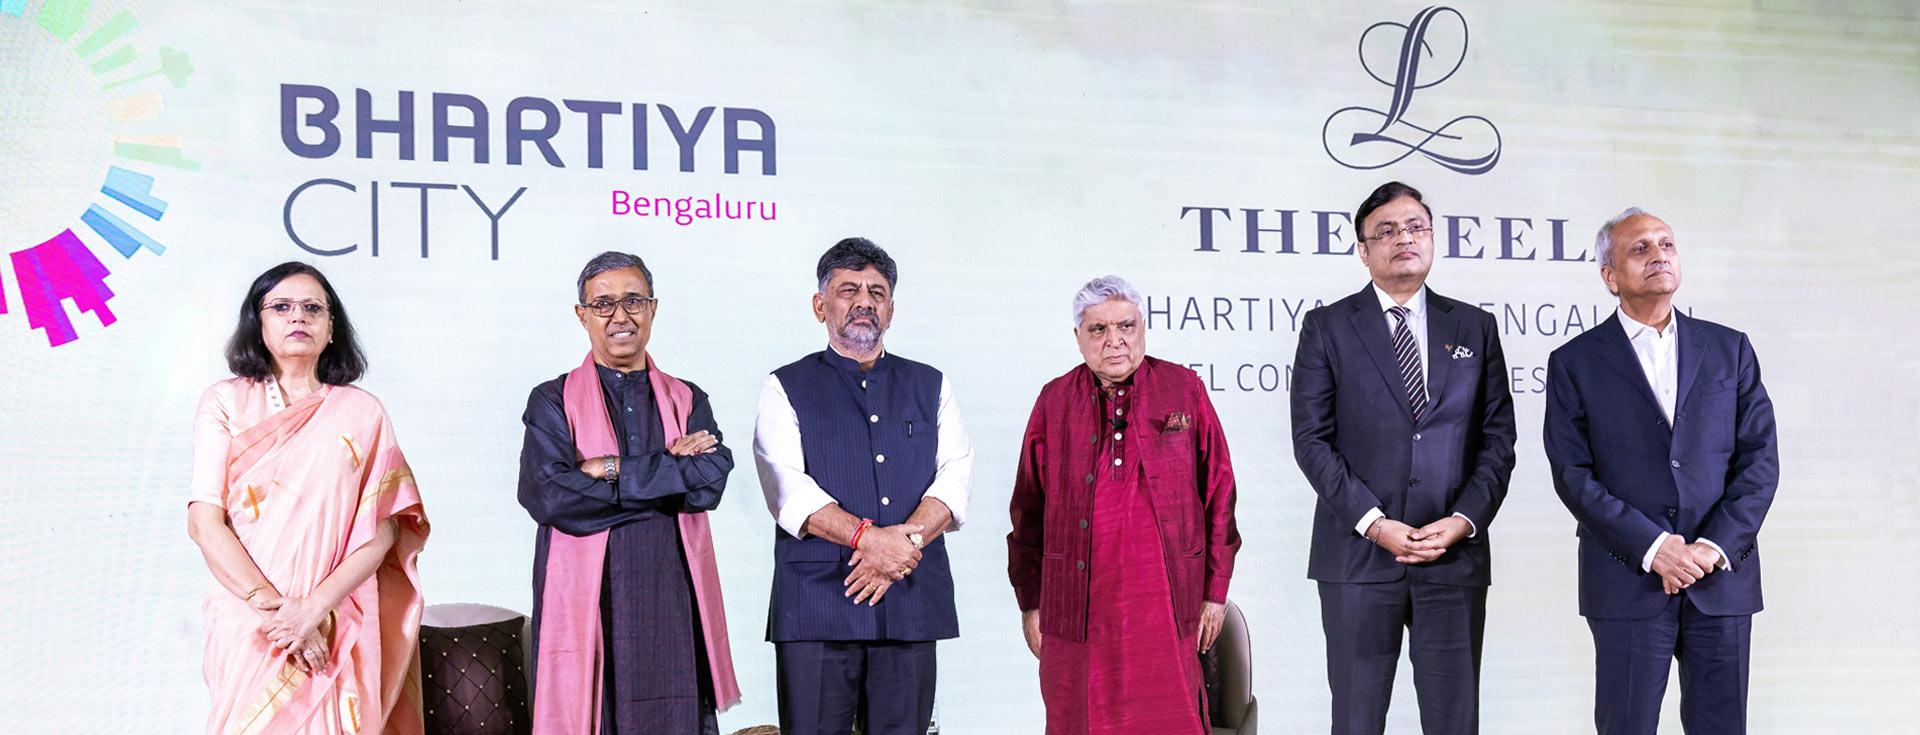 The Leela Bhartiya City Bengaluru curated an evening of celebrations